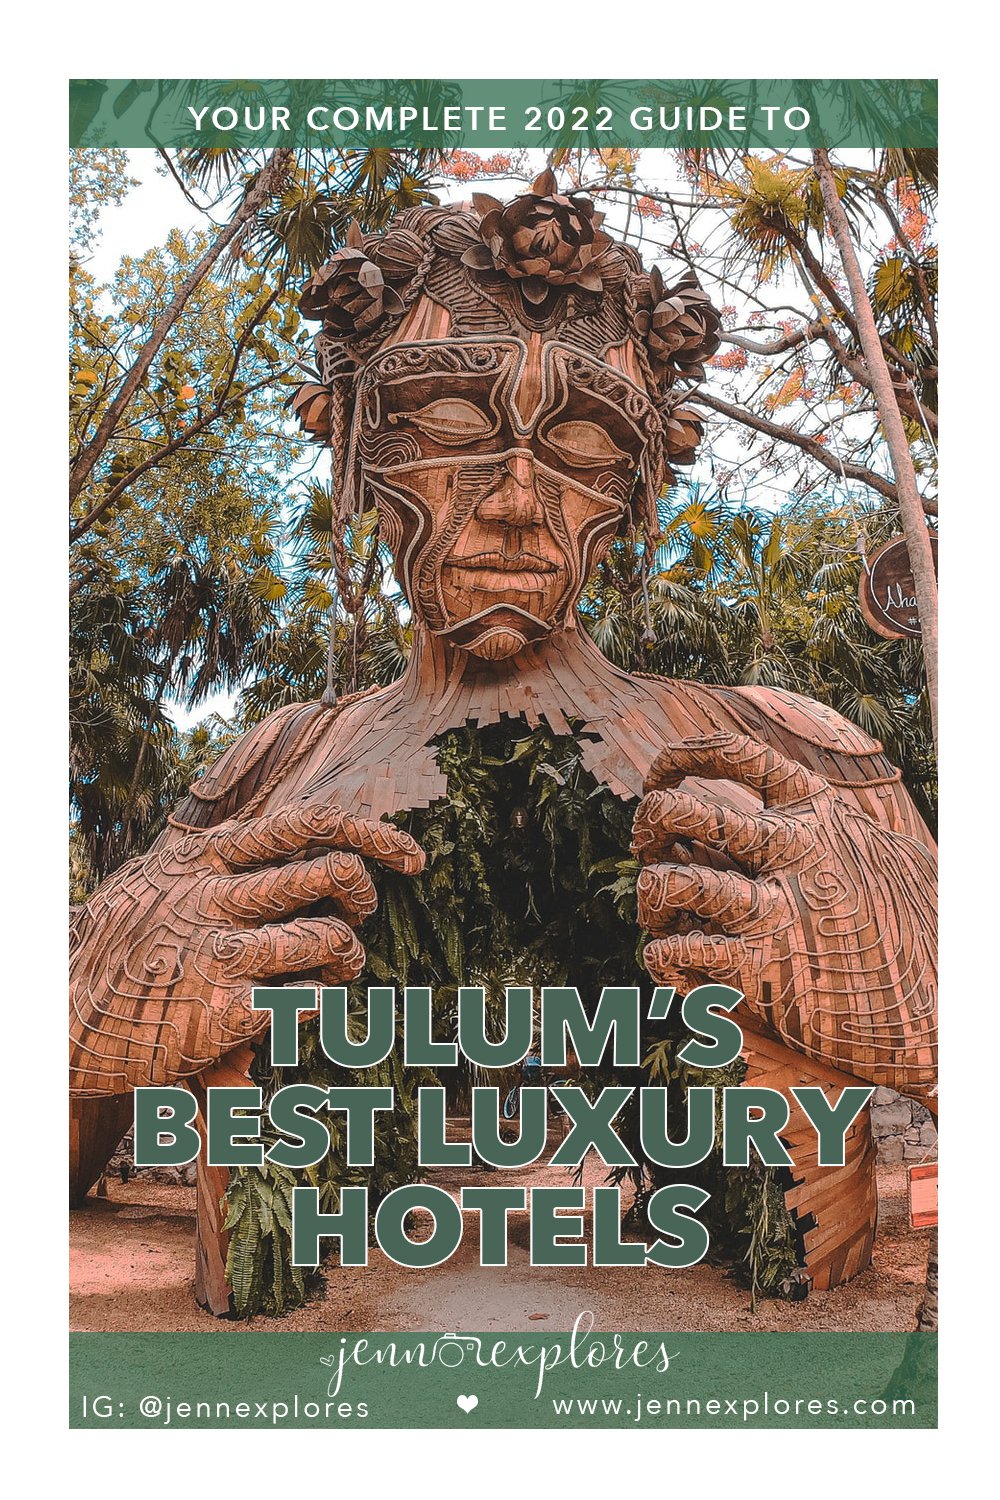 The BEST Luxury Hotels in Tulum